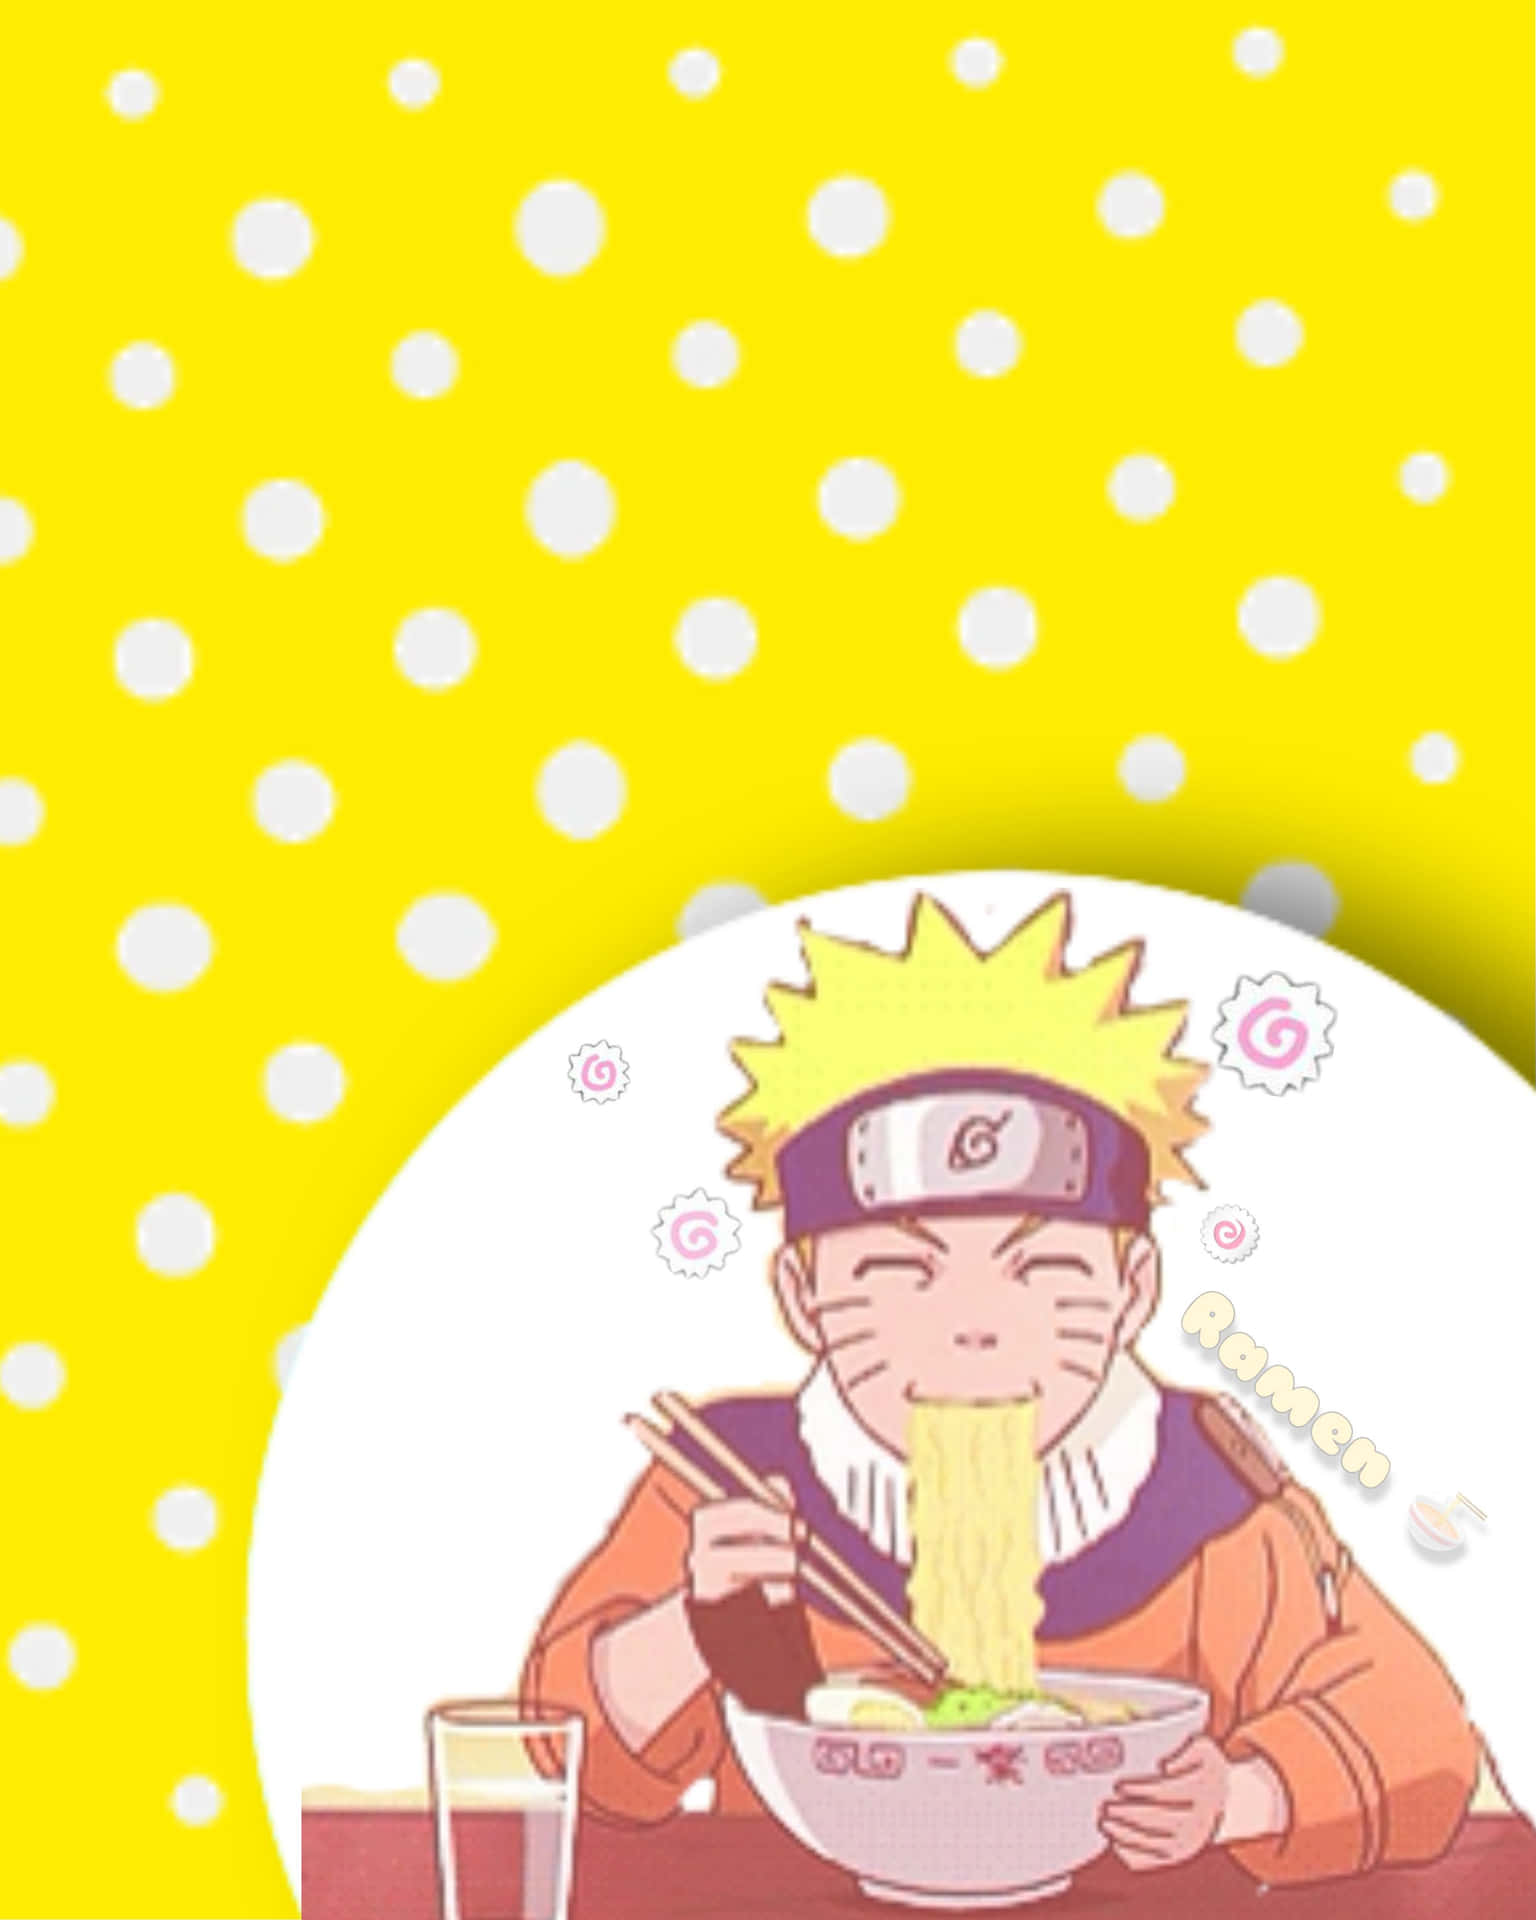 Enjoy a refreshing bowl of Naruto Ramen on a warm day! Wallpaper